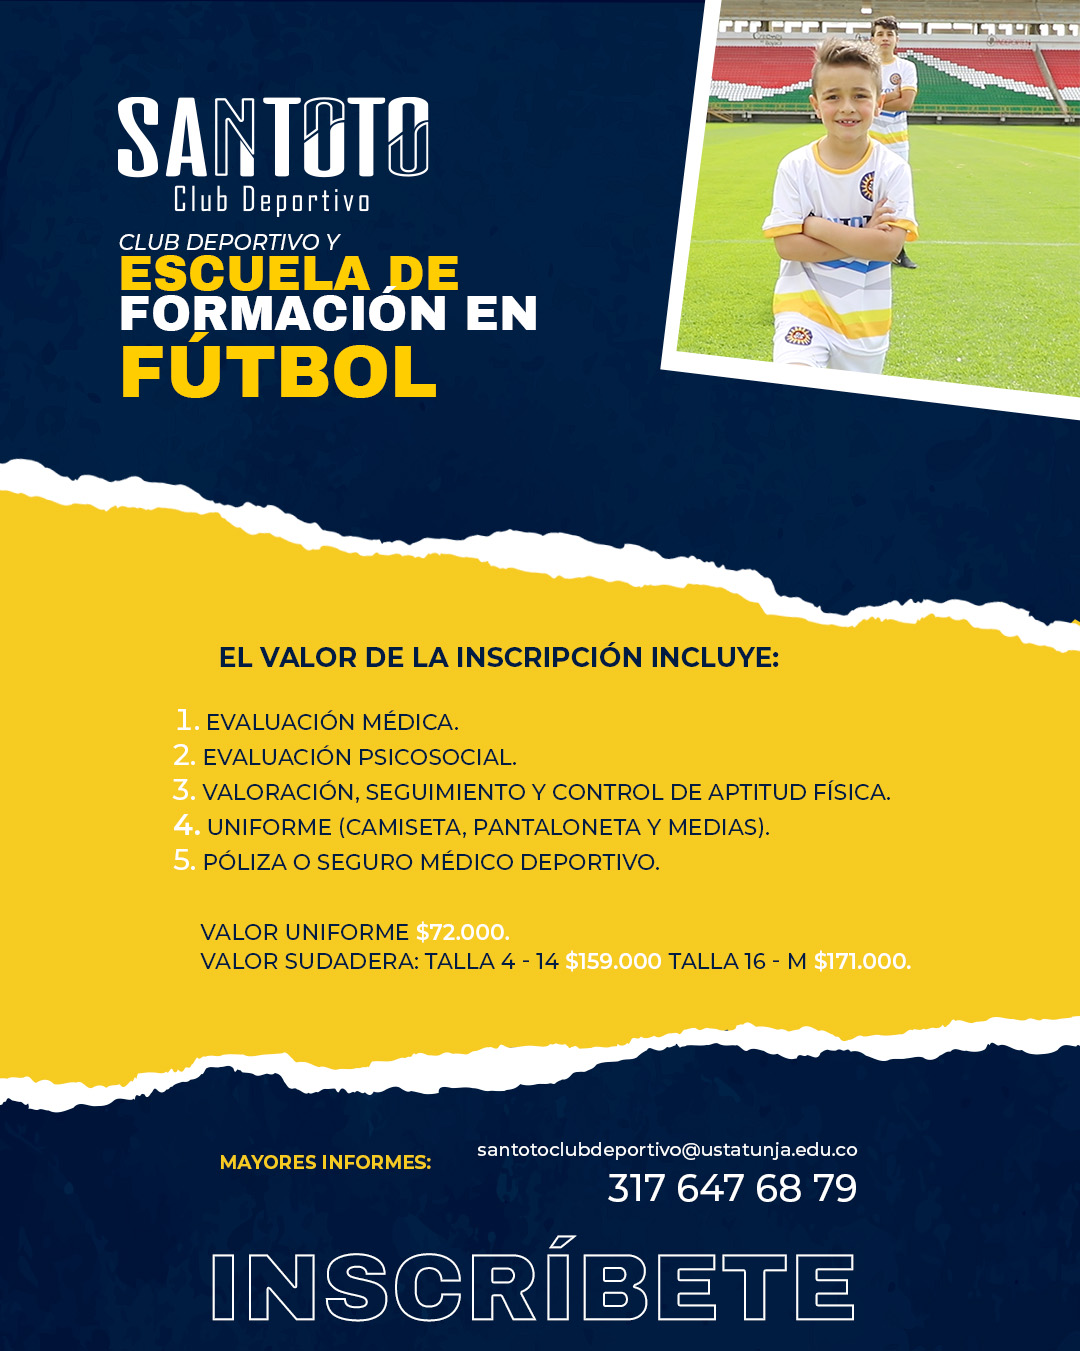 Futbol_Club_Deportivo_Santoto_Tunja_1